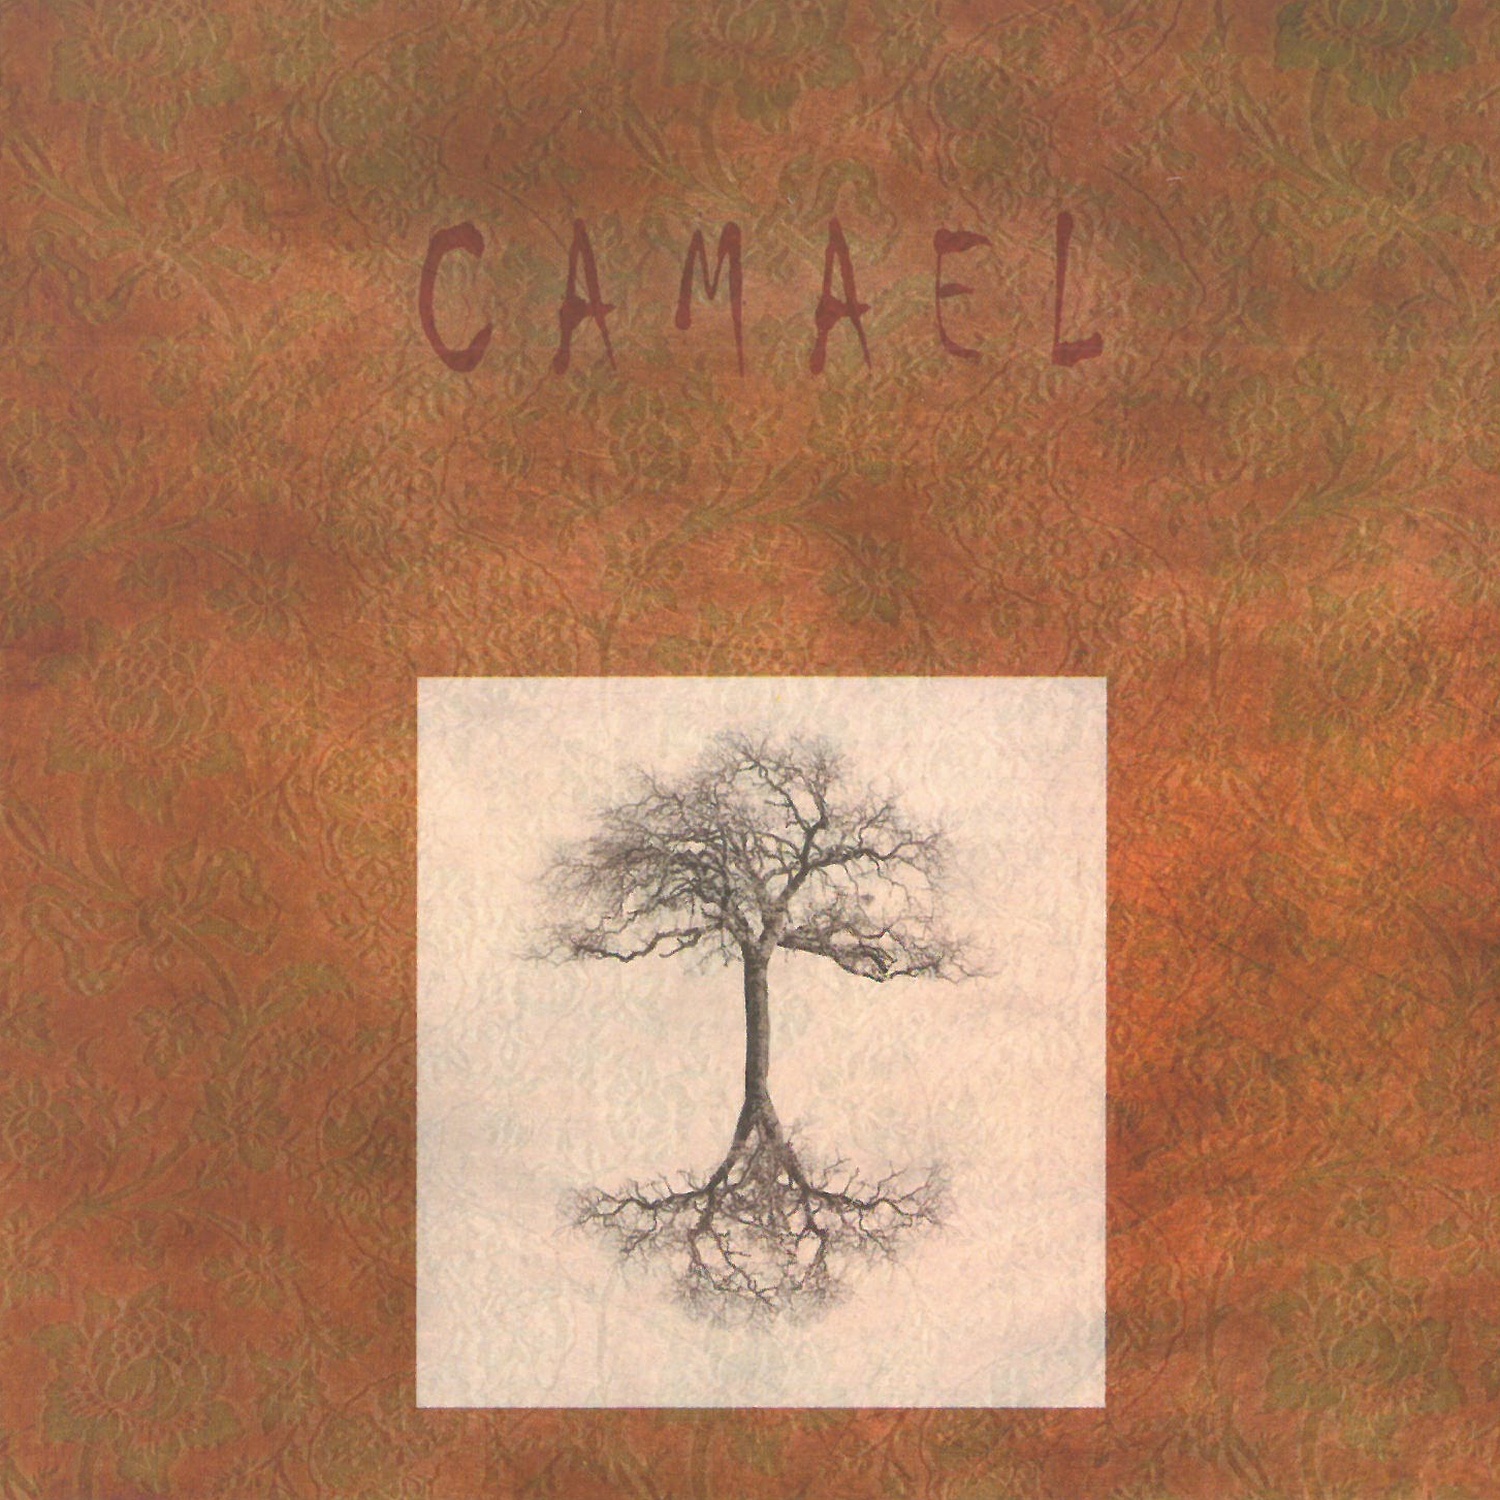 CD Shop - CAMAEL 